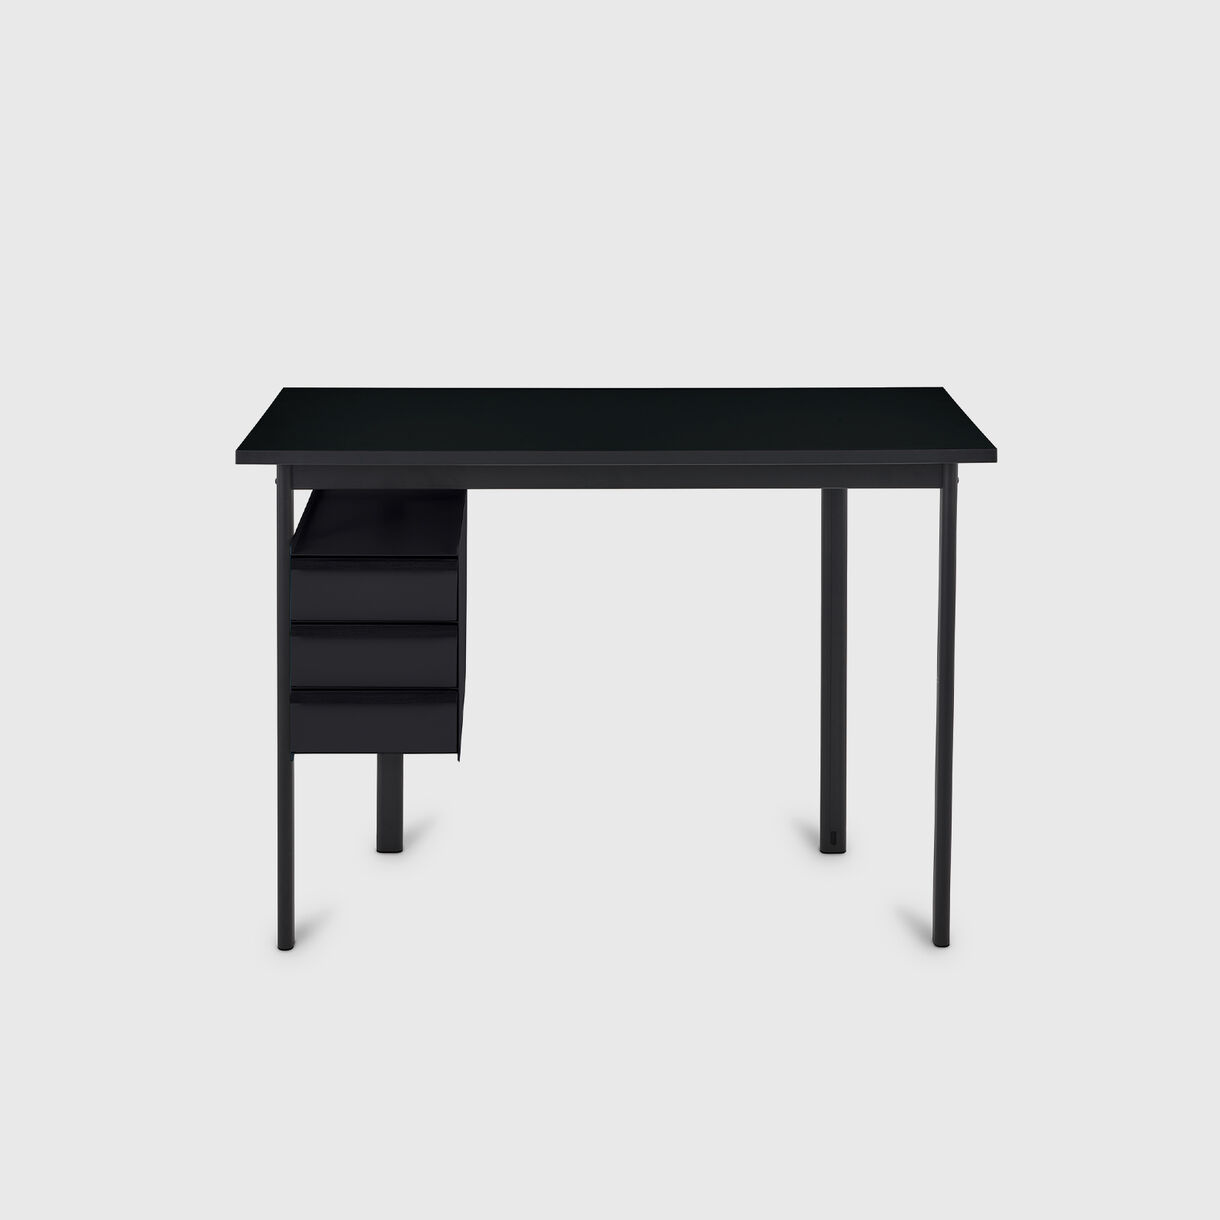 Mode Desk with Storage, Black Top, Black Storage, Black Handles